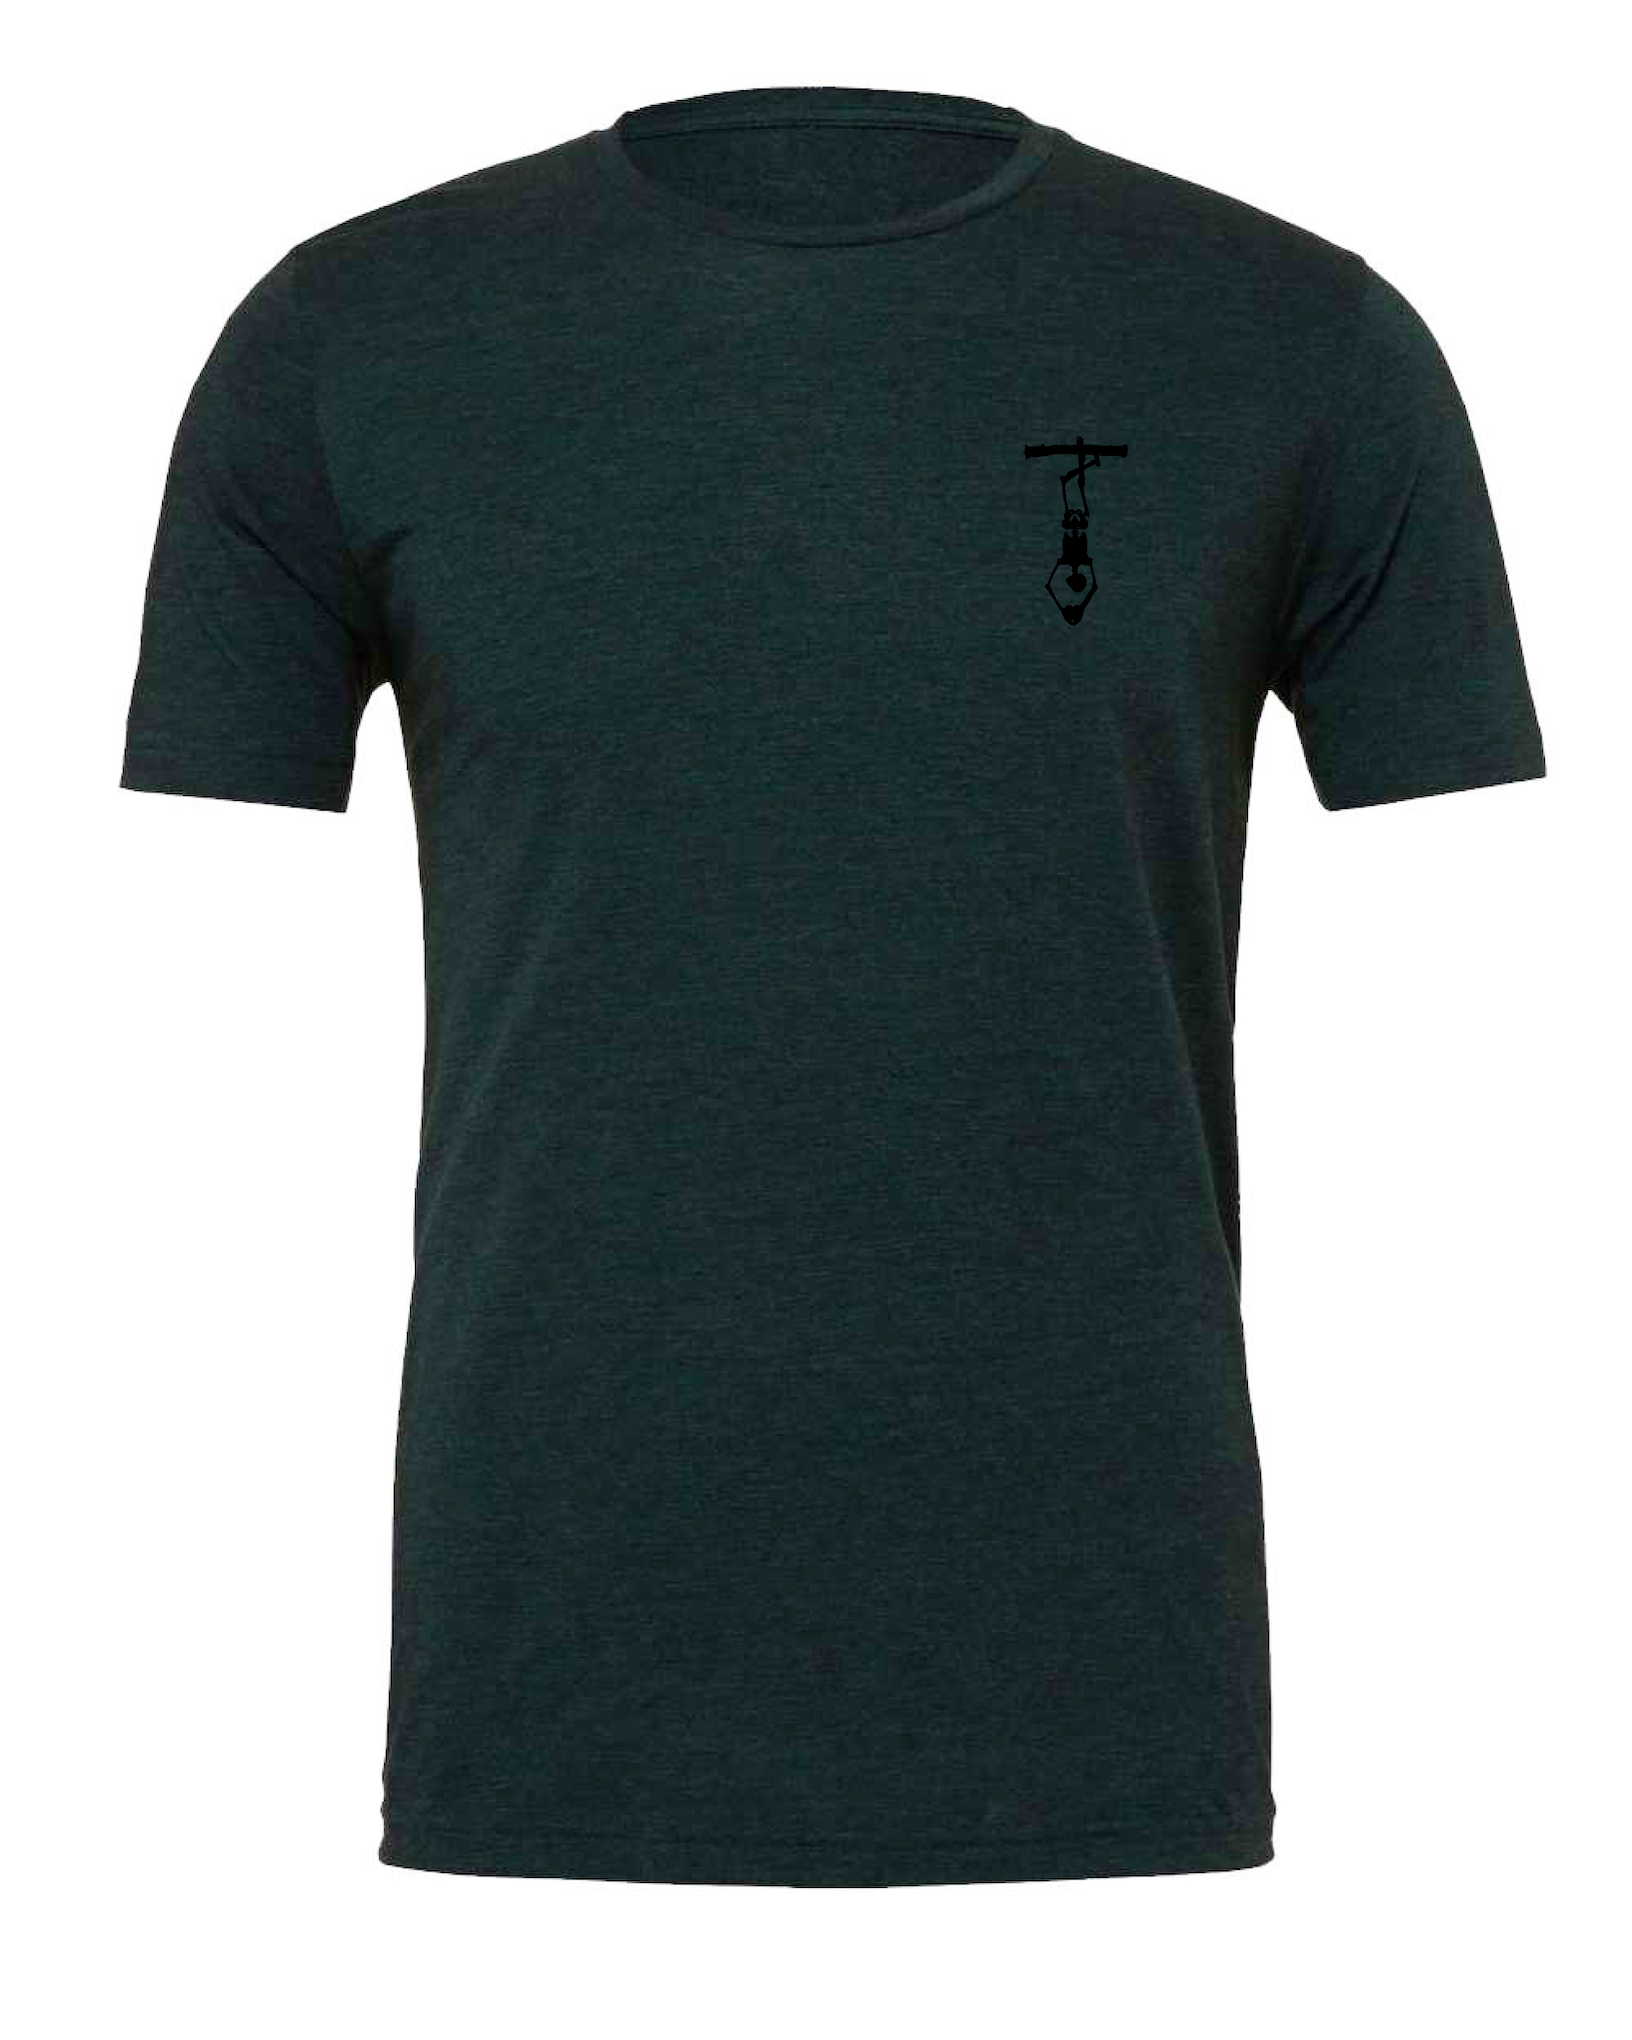 SEG Hanged T-Shirt - Black Print